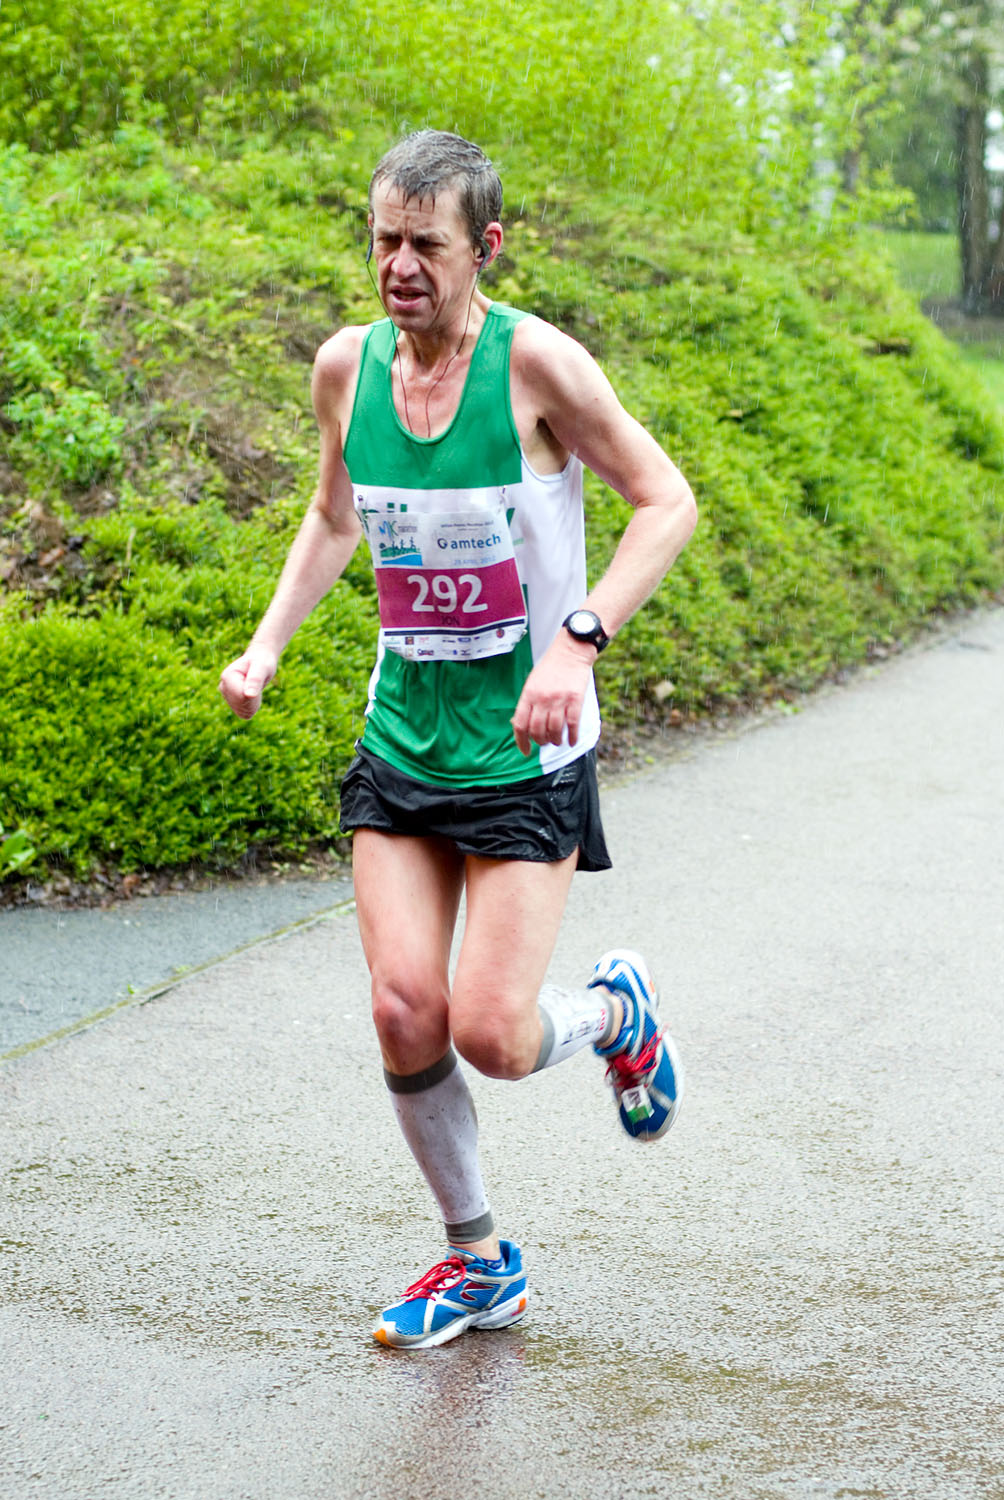  Milton Keynes Marathon 2012 - Mile 24.75 